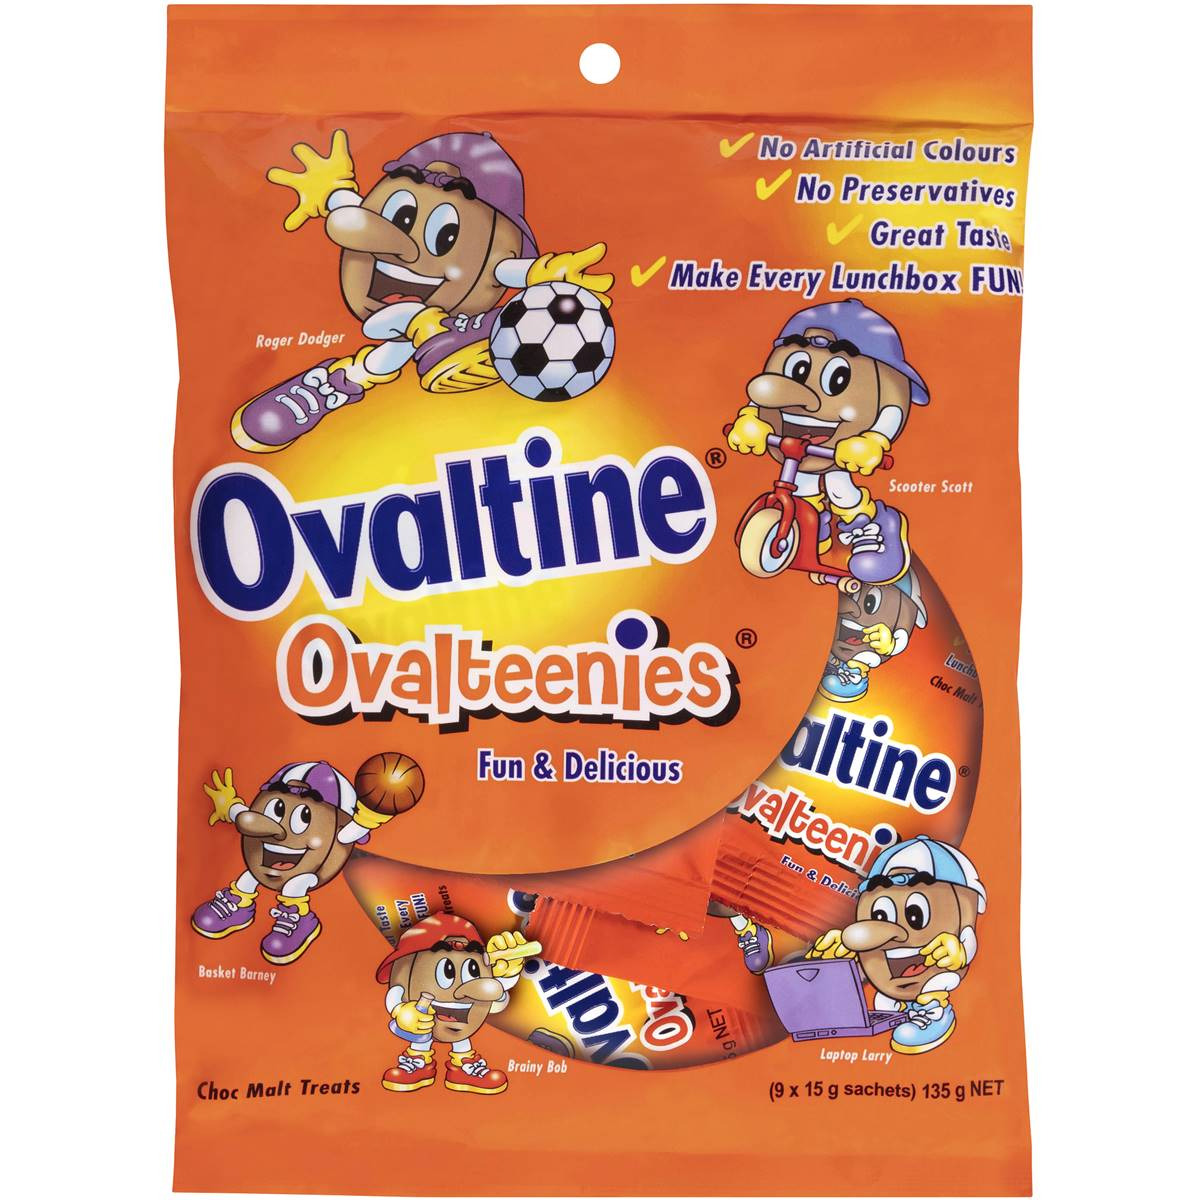 Ovaltine Ovalteenies Share Pack 135g